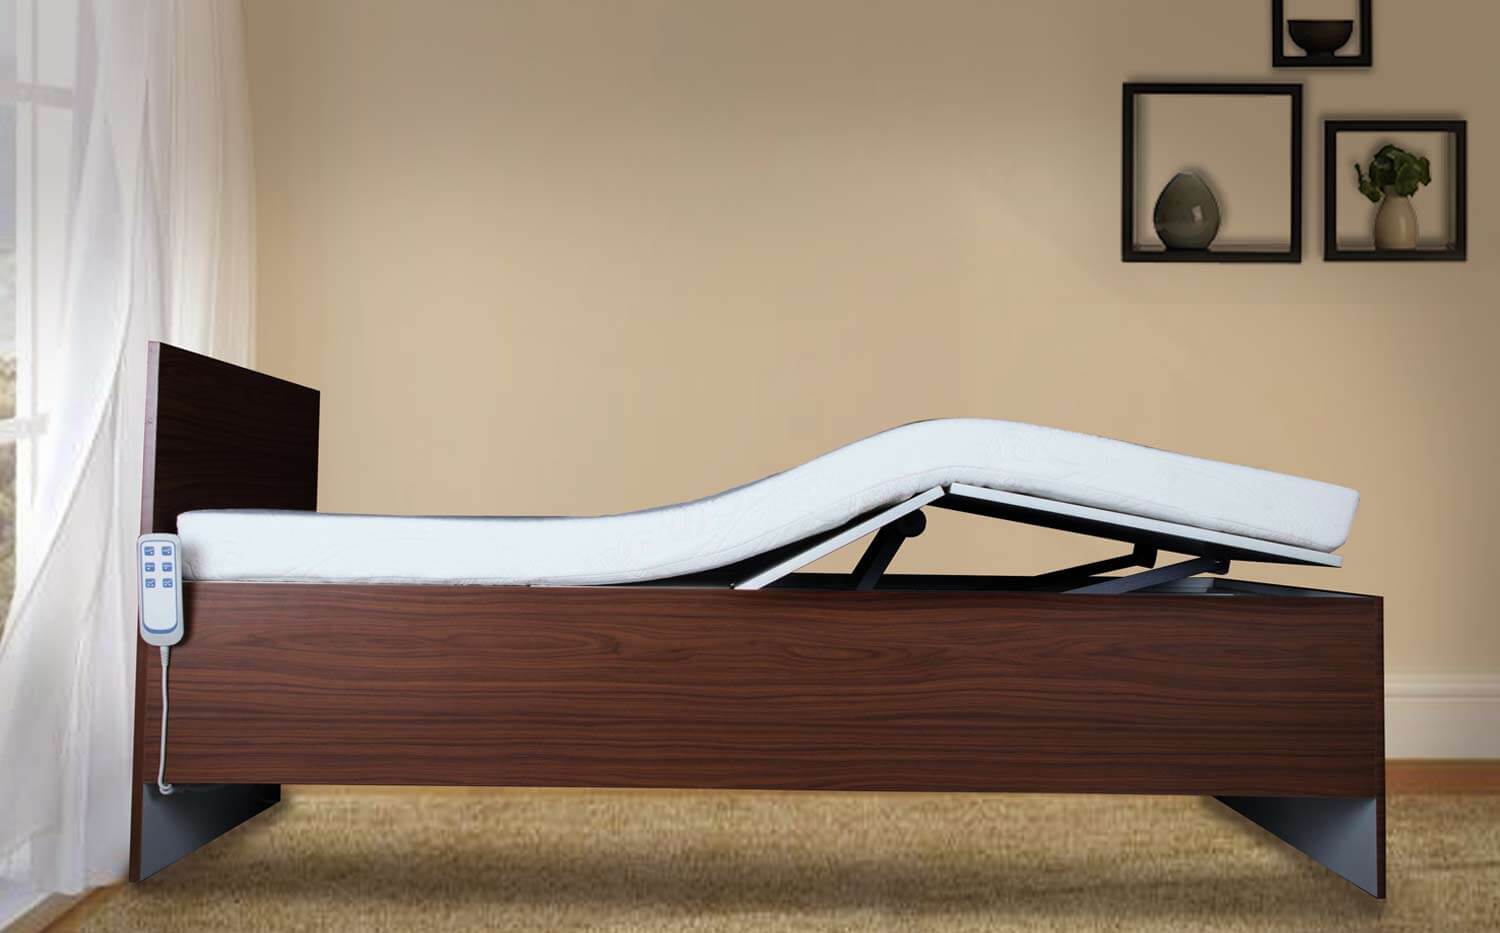 Adjustable Beds for Leg Rest Position India